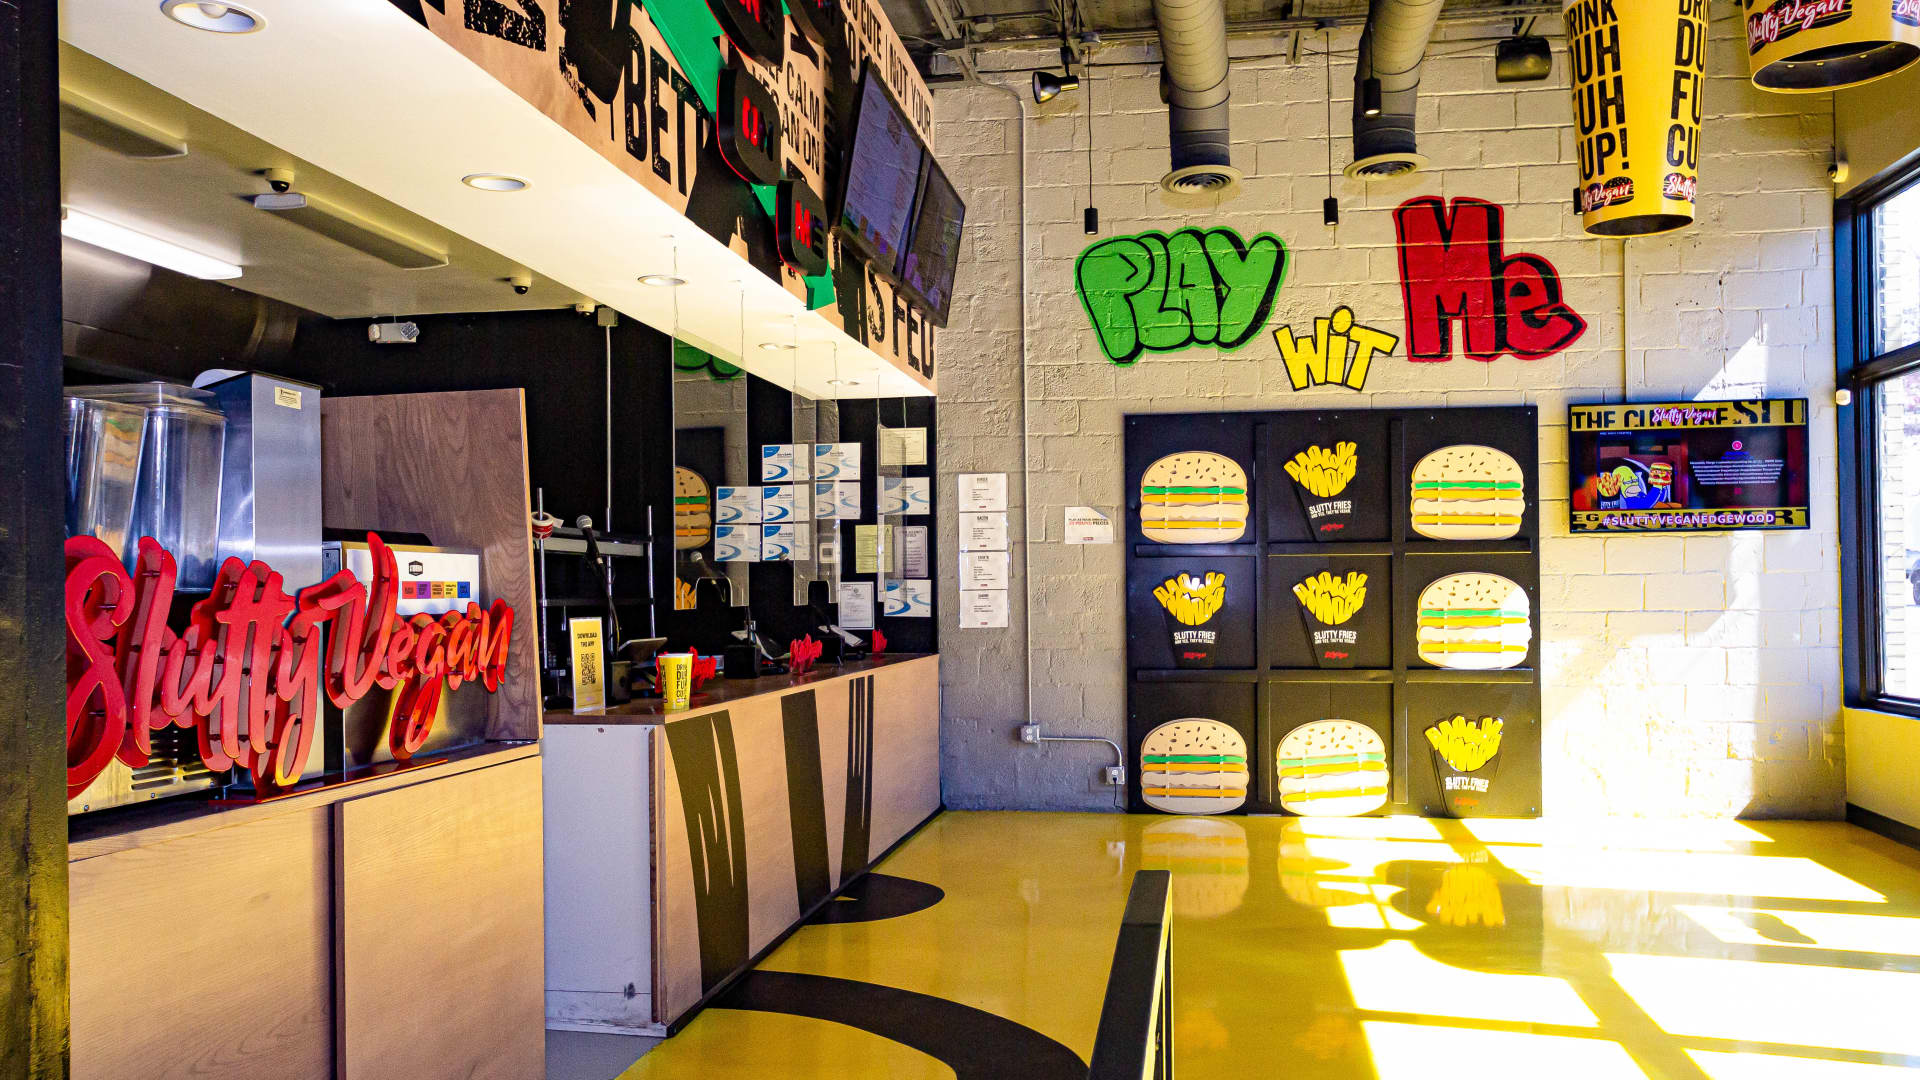 The interior of a Slutty Vegan location in Atlanta, featuring bright colors and graffiti-inspired artwork.